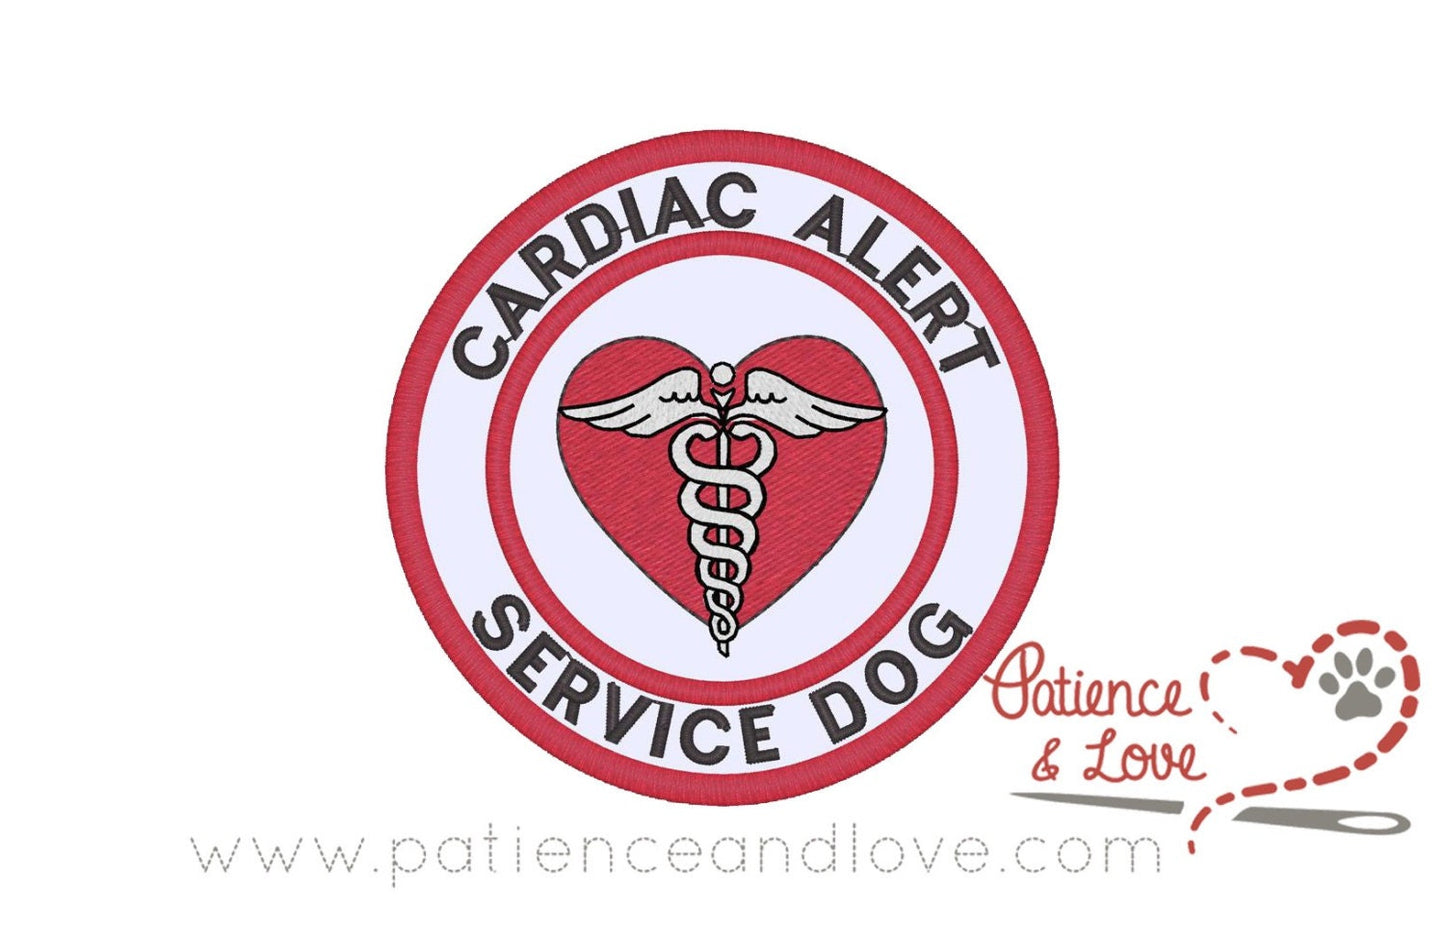 cardiac alert service dog, heart with caduceus, 3-inch round patch